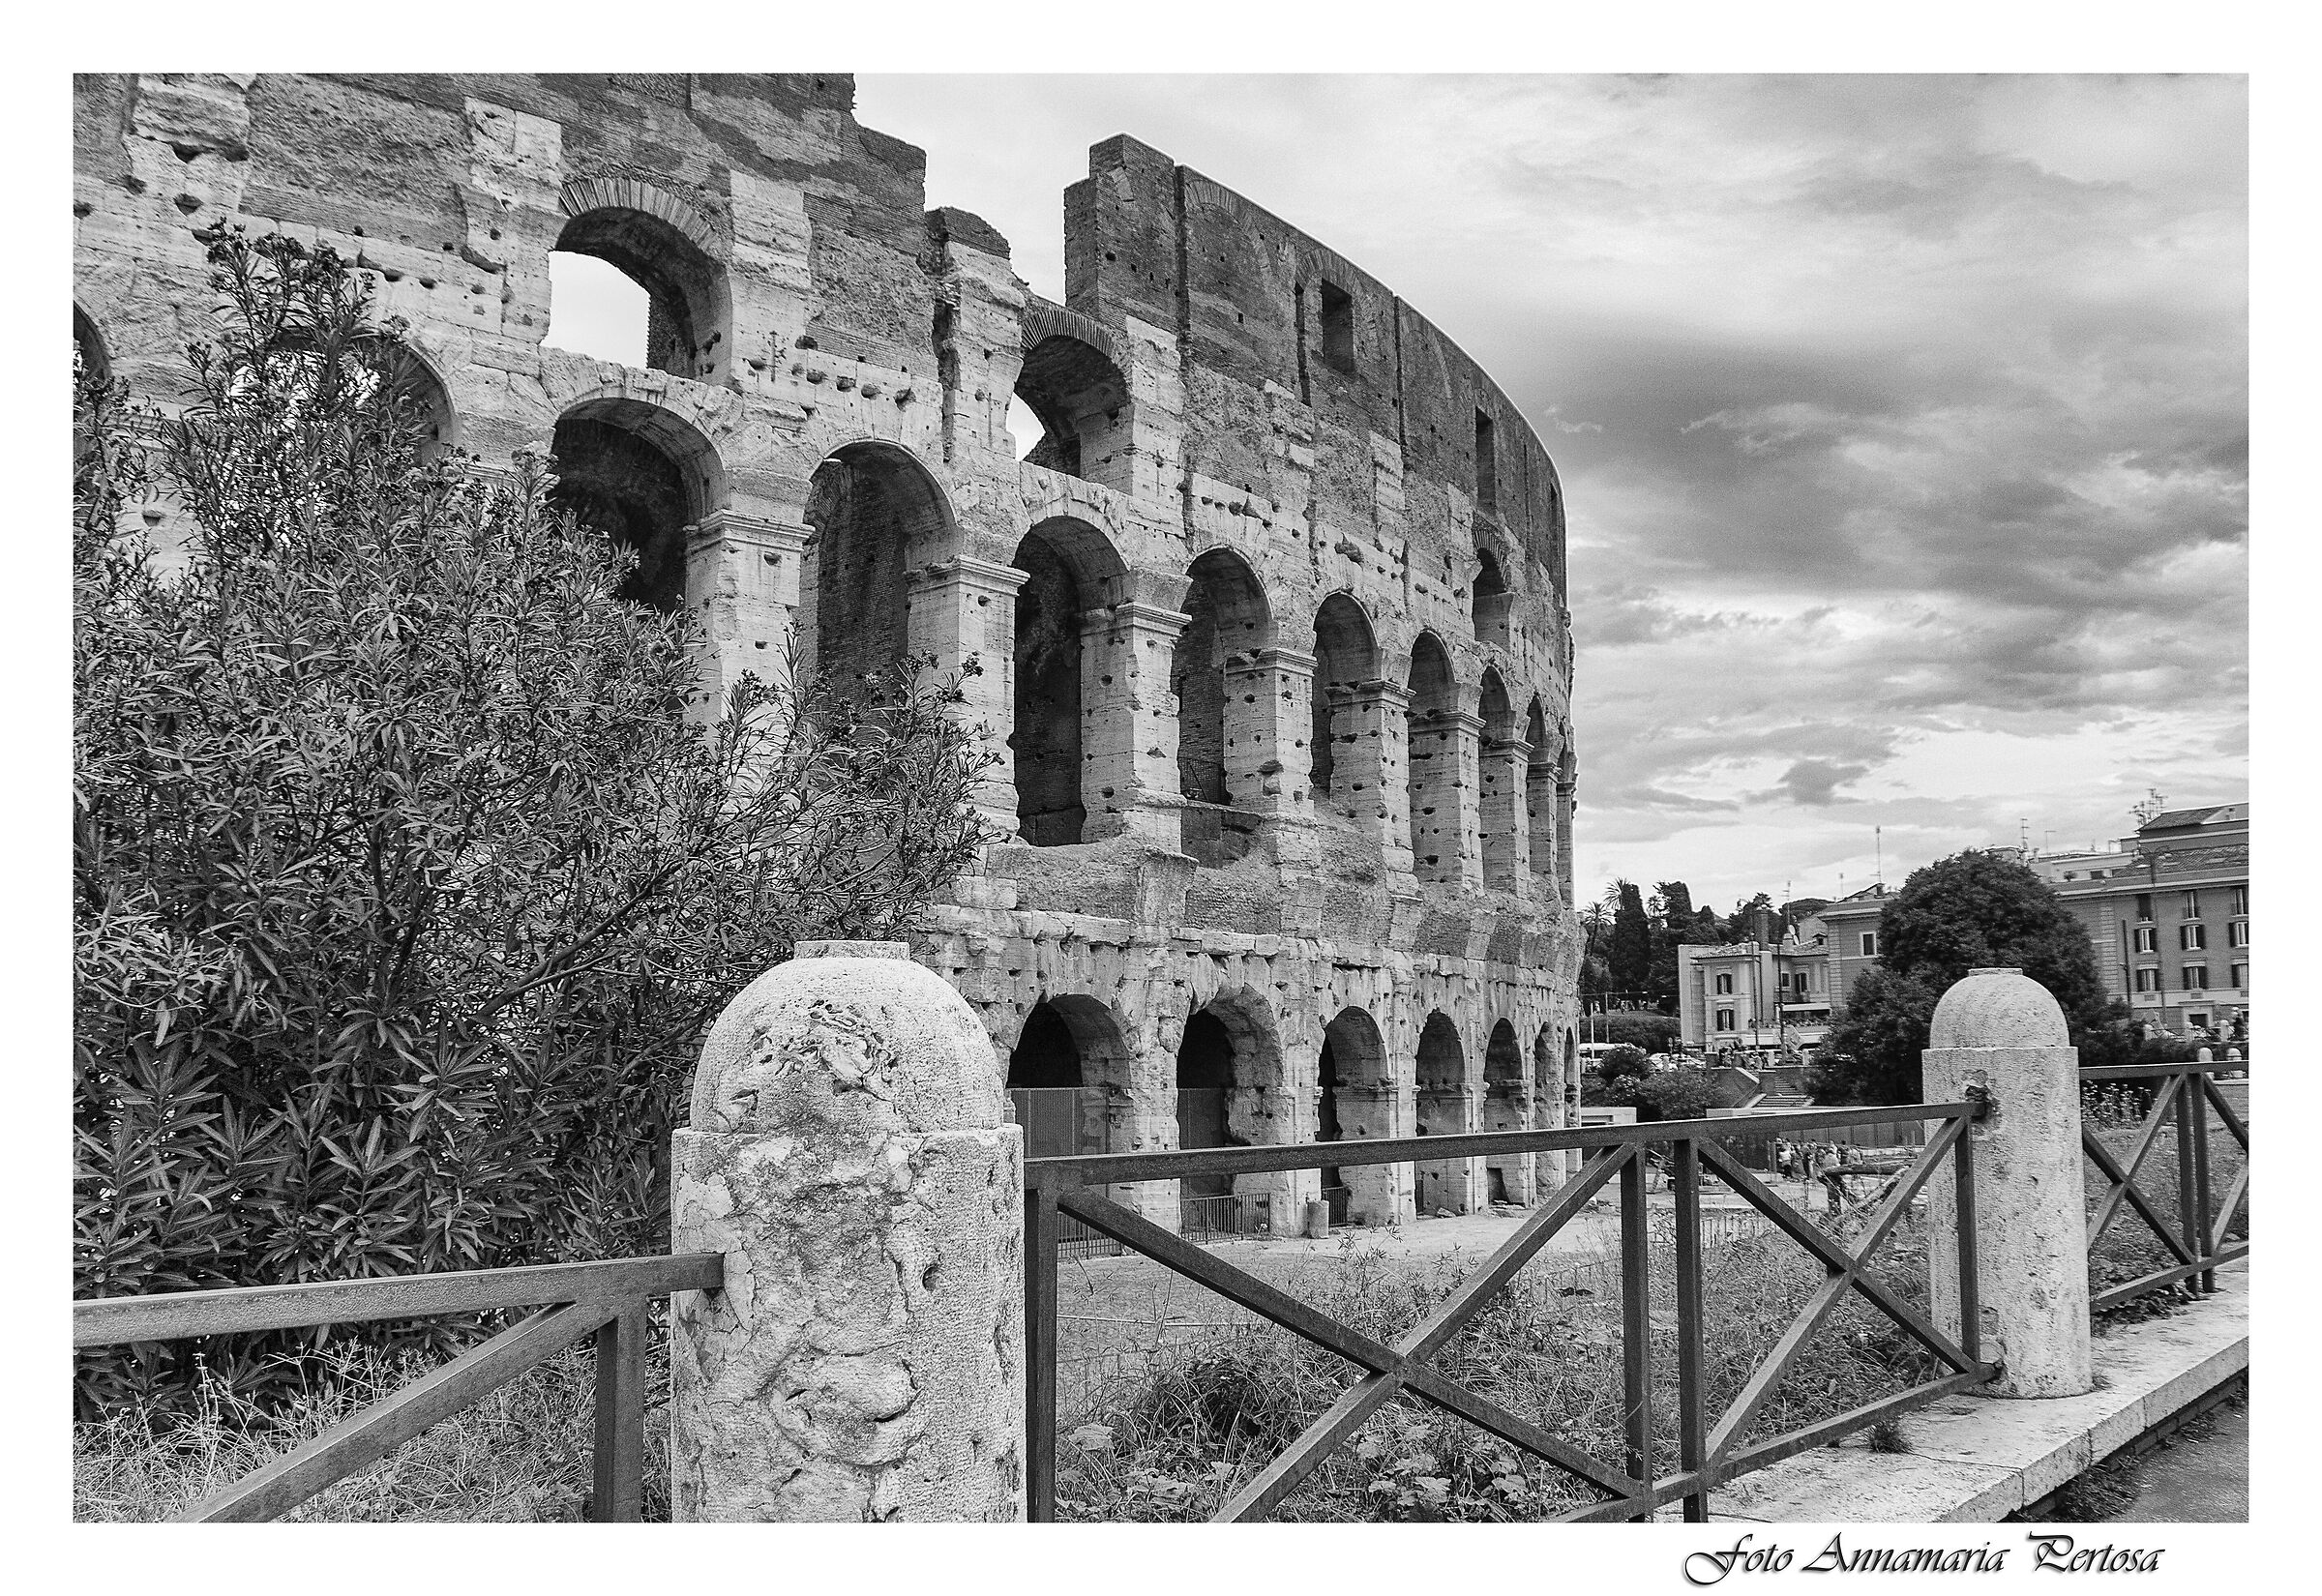 A glimpse of the Colosseum...